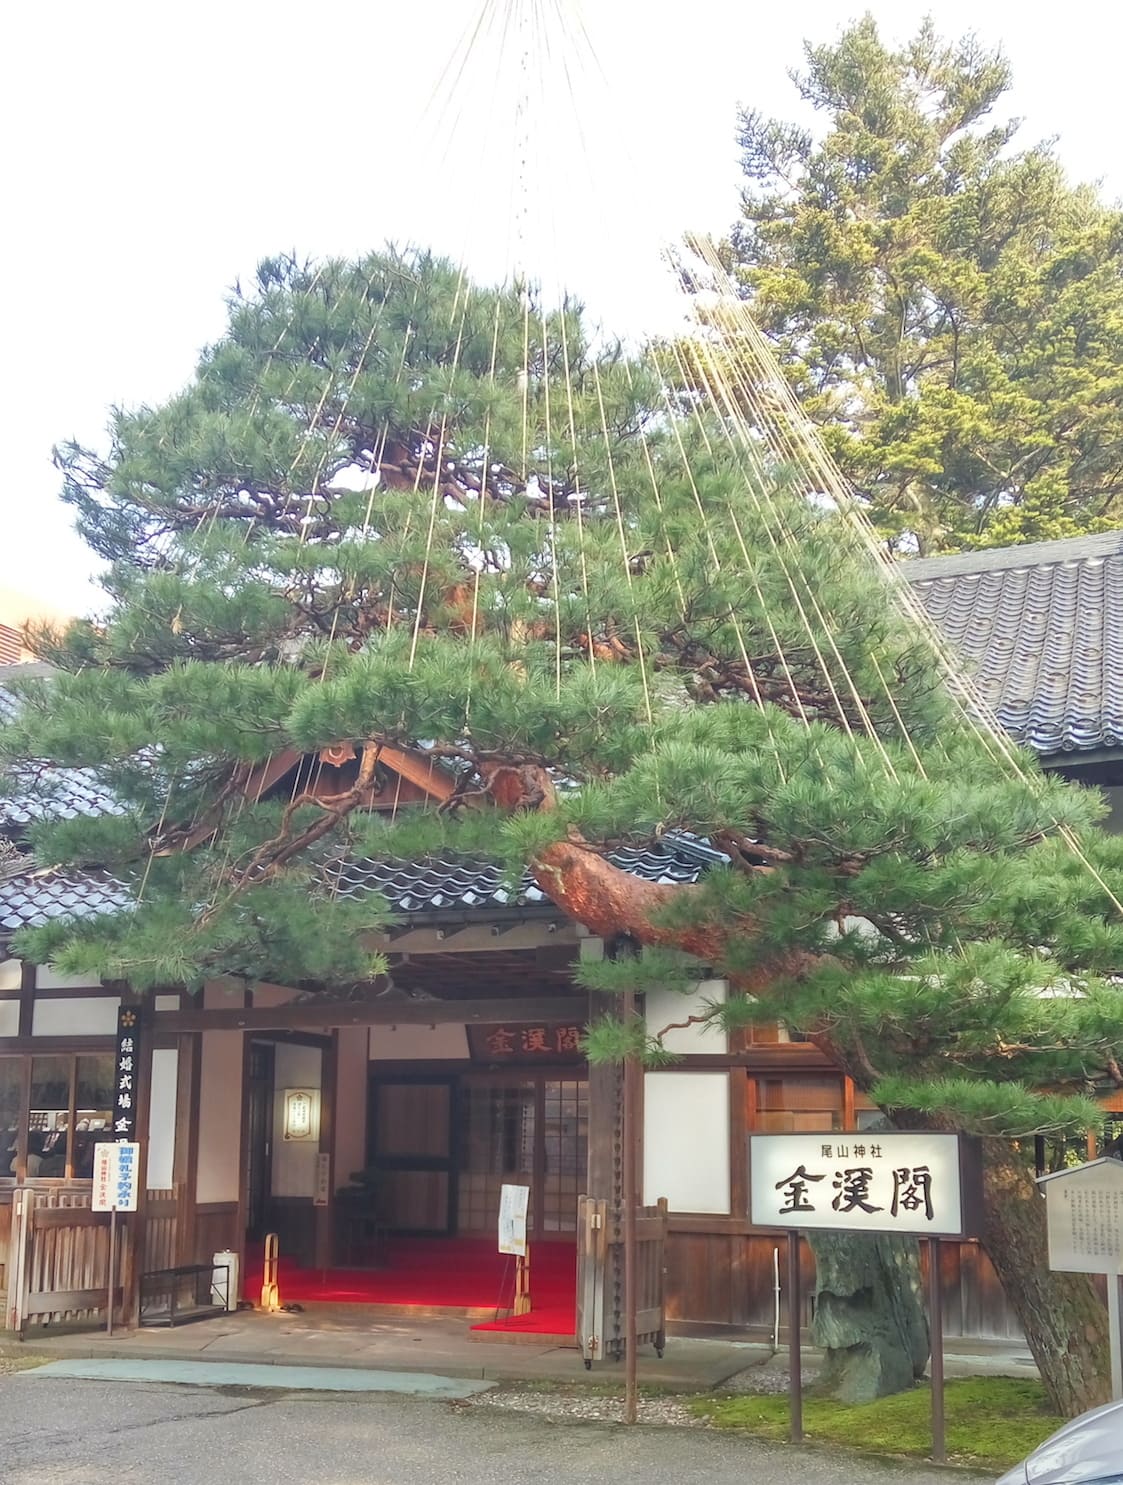 Atracción: Jardín Kenrokuen de Kanazawa en Japón